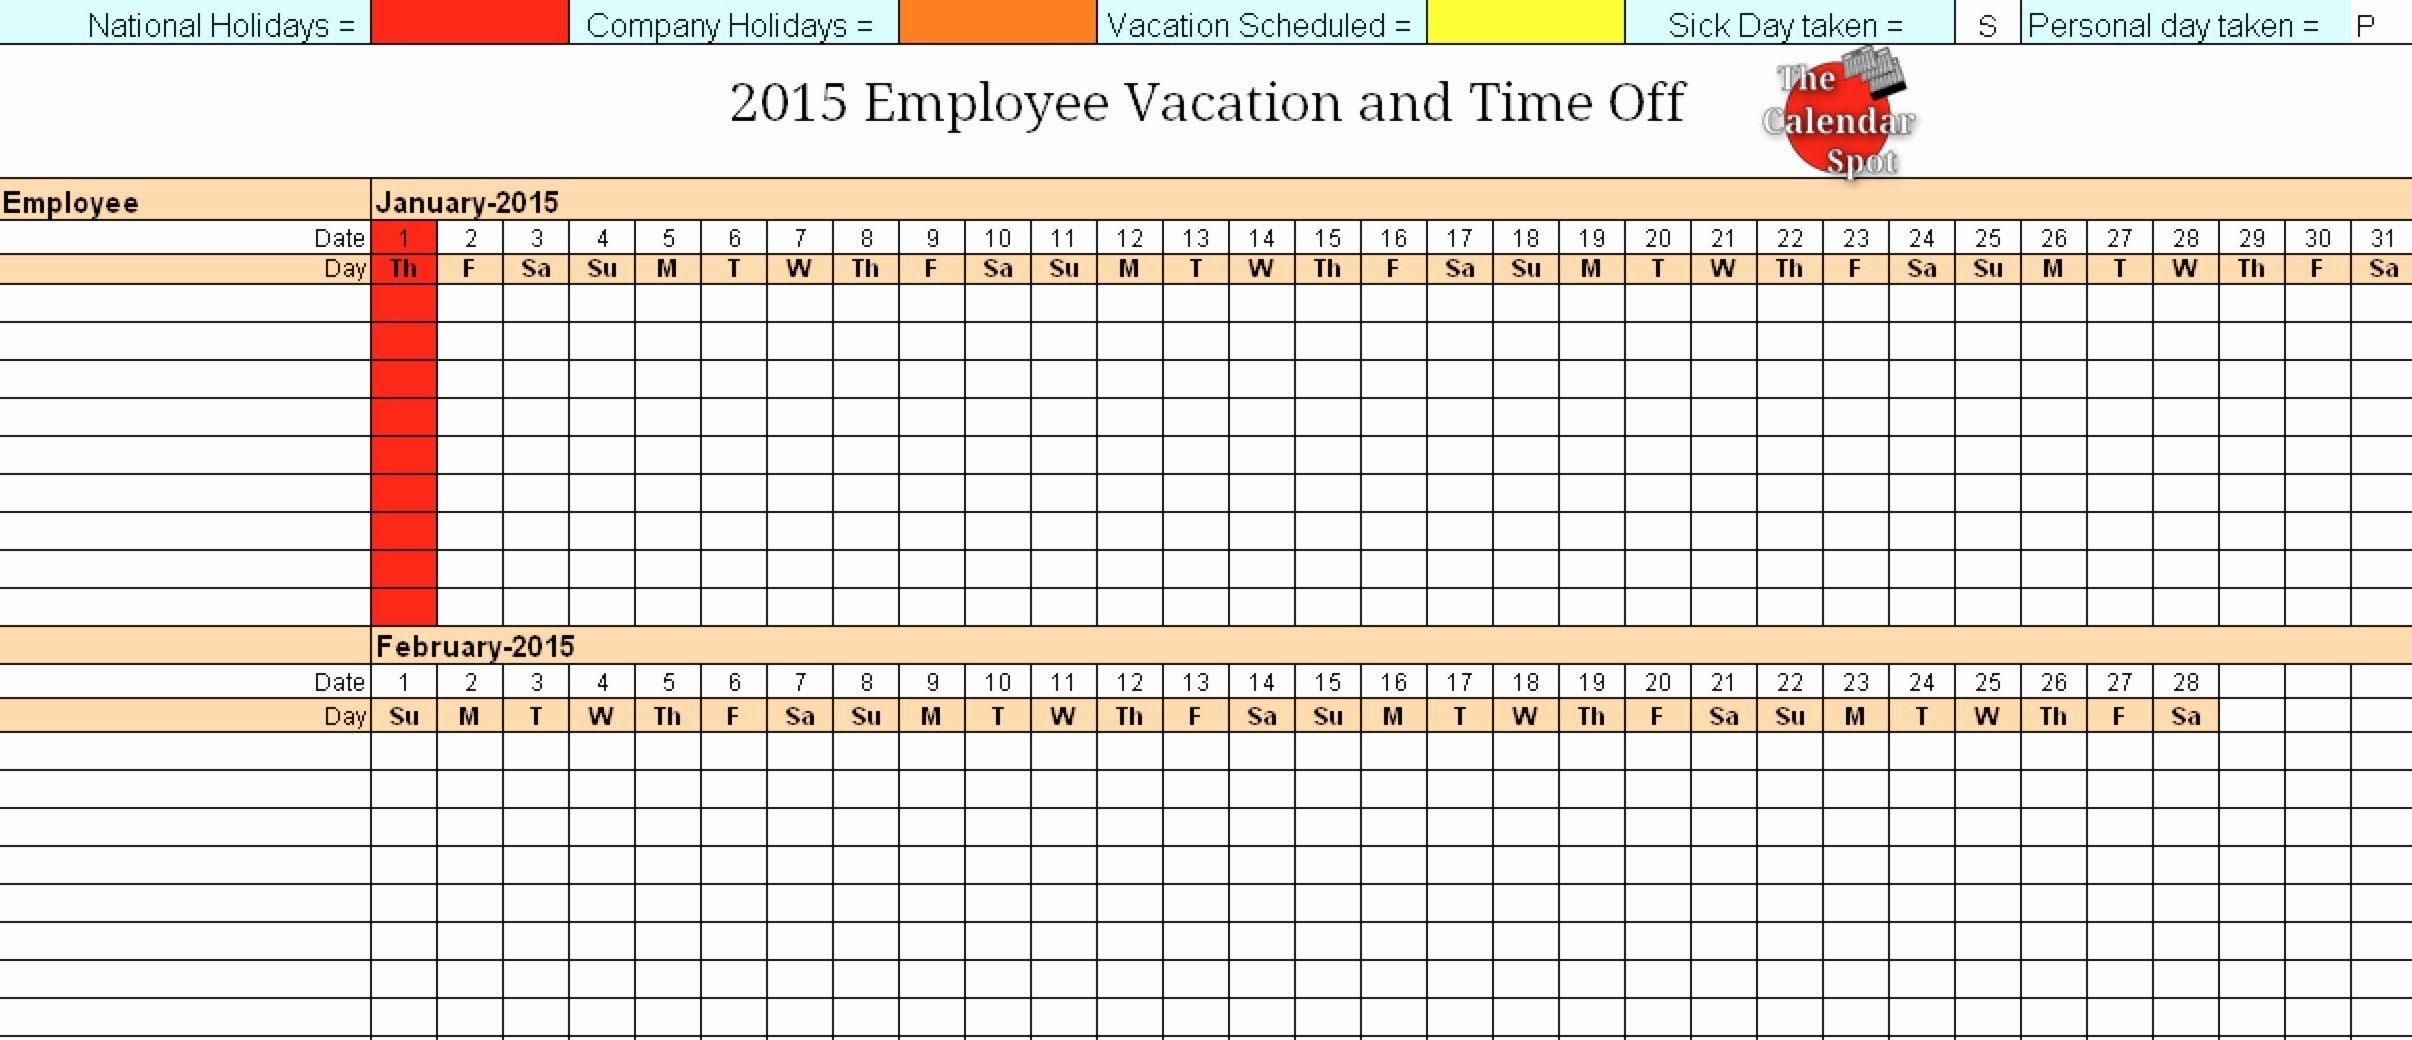 Employee Vacation Schedule Template - Yeniscale.co  Downloadable Employee Vacation Calendar 2015